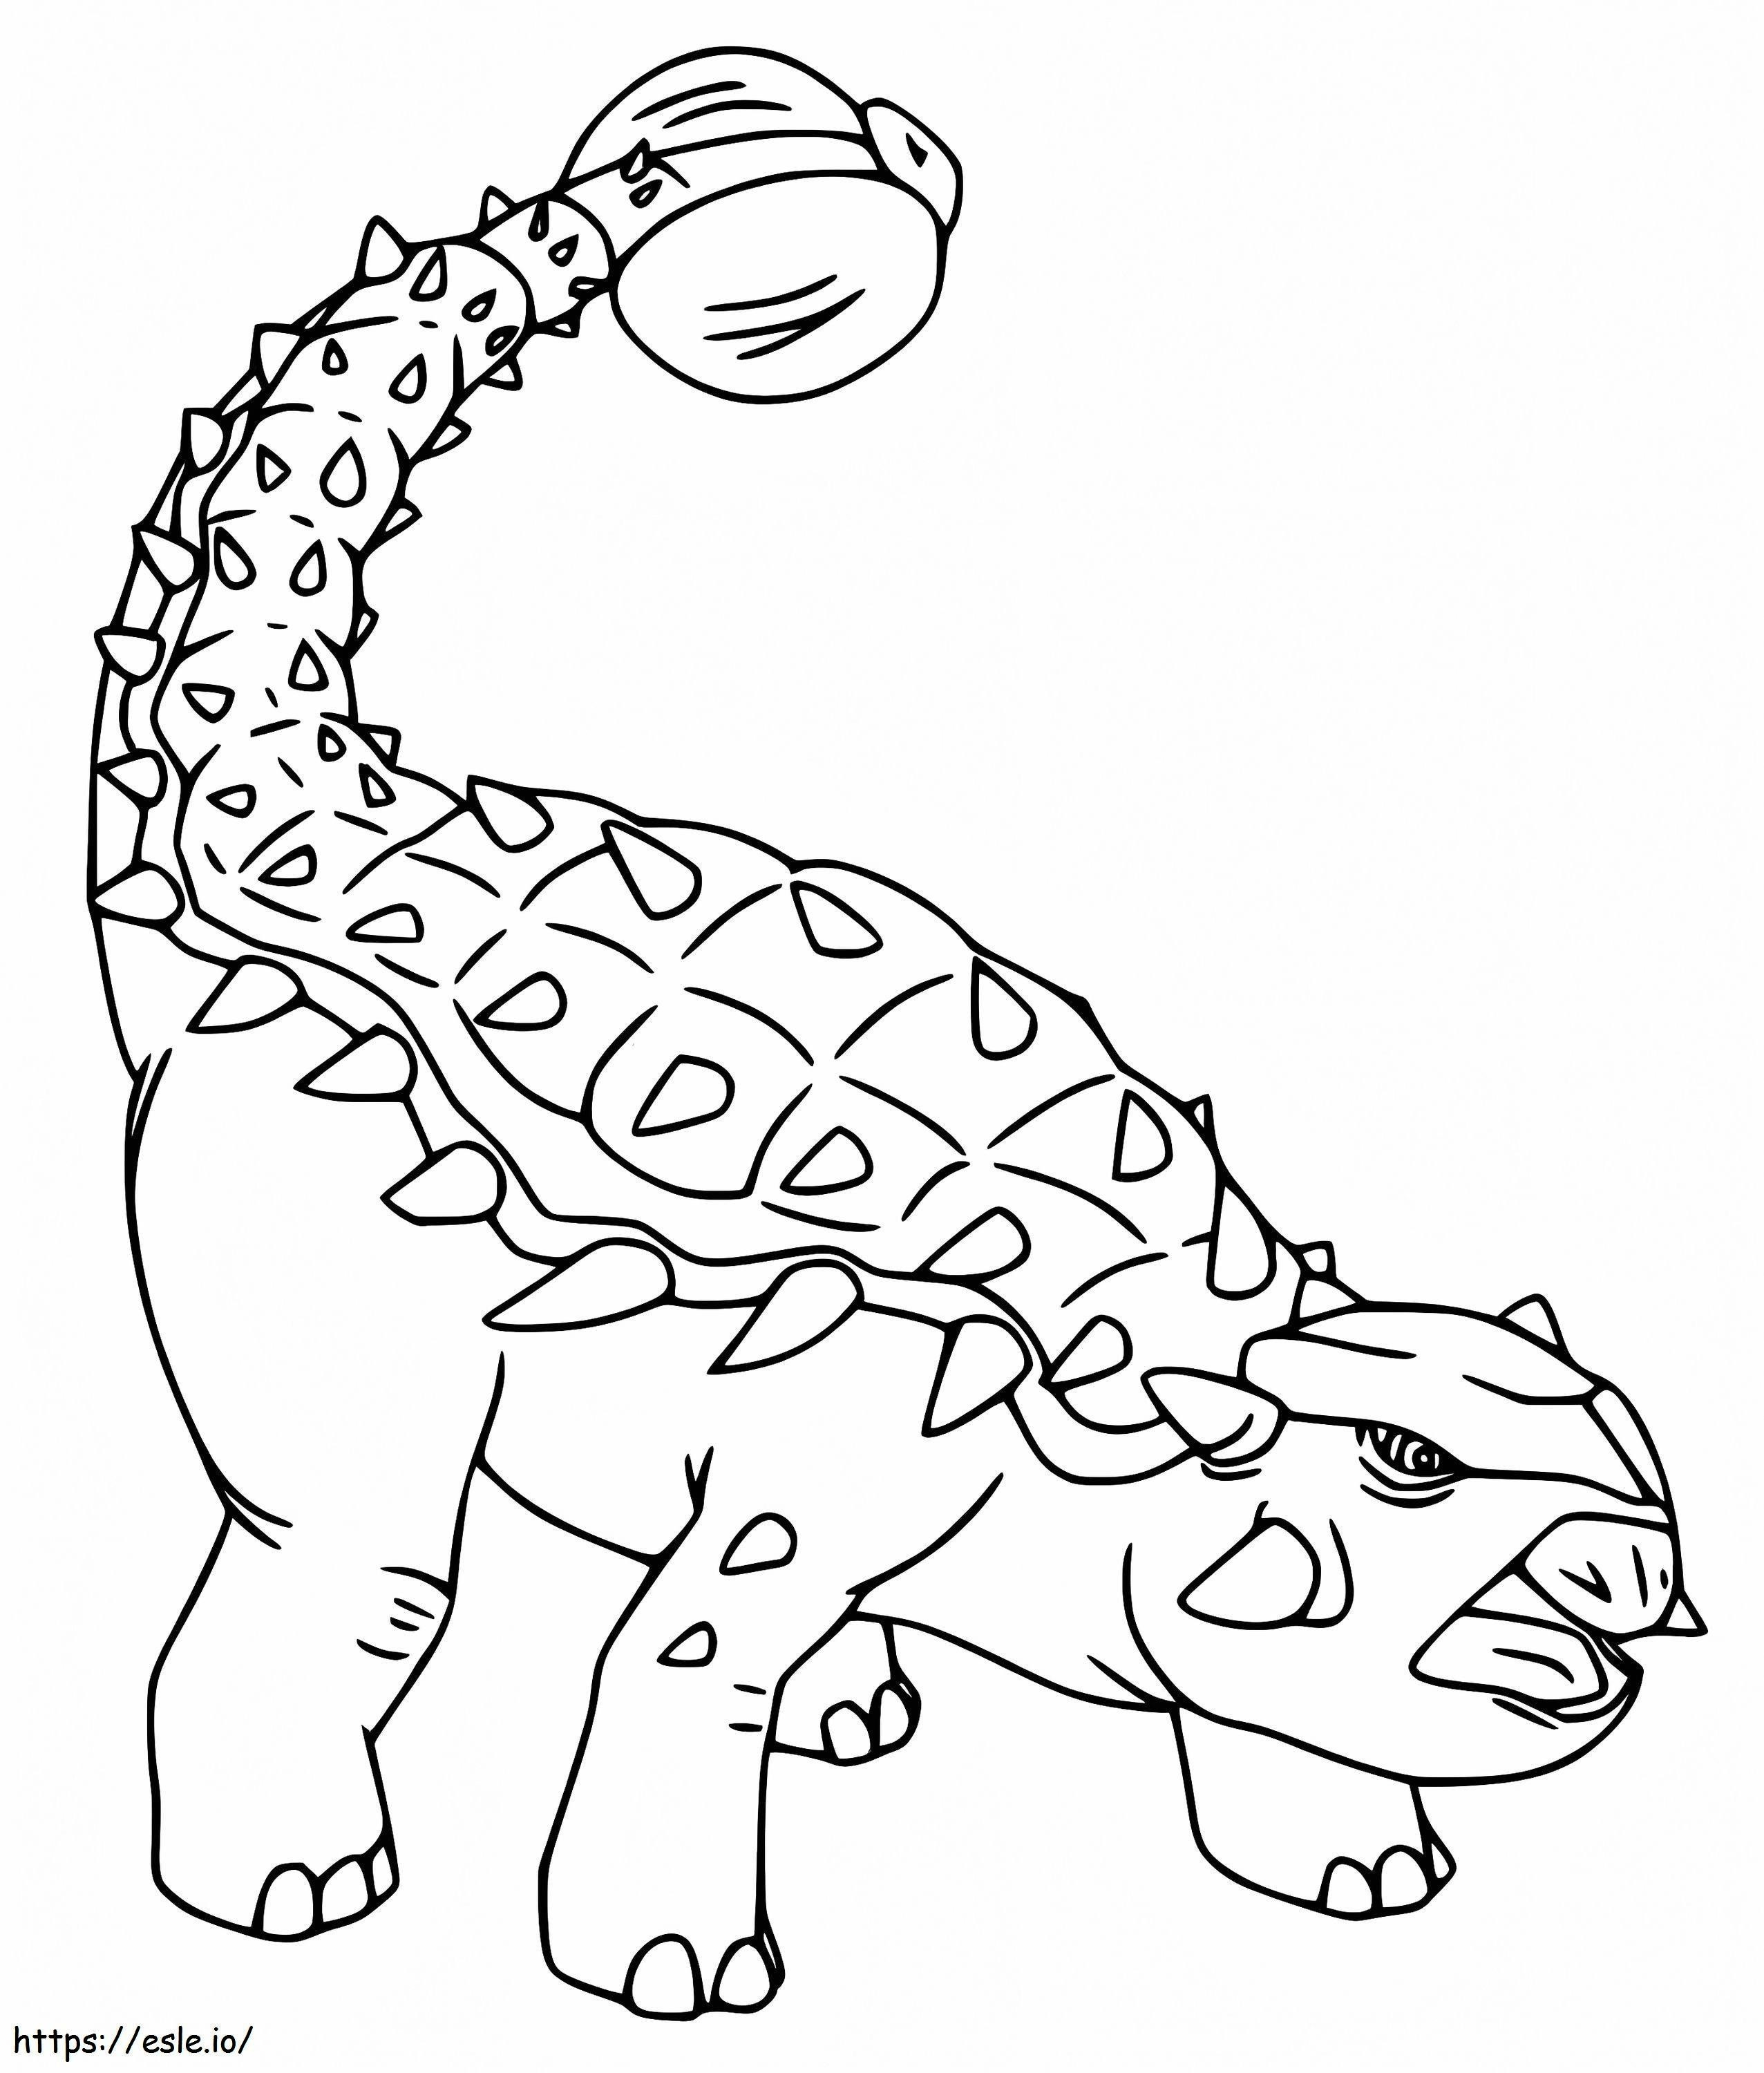 Wściekły Ankylozaur kolorowanka